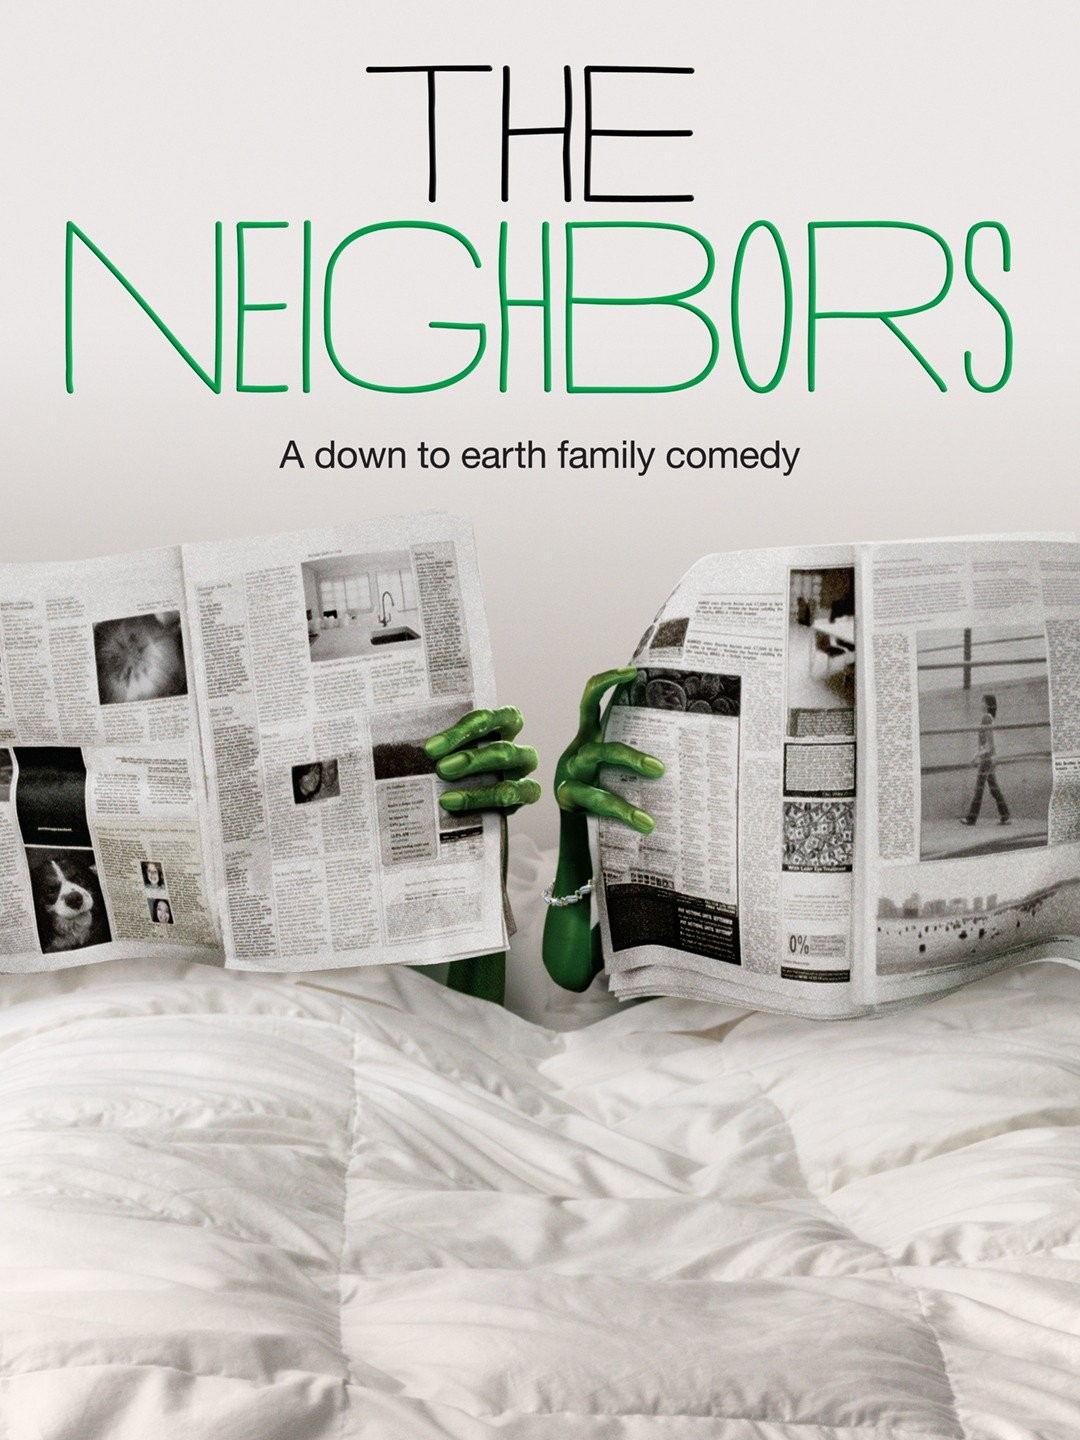 Not Your Average Neighbor: December 2013